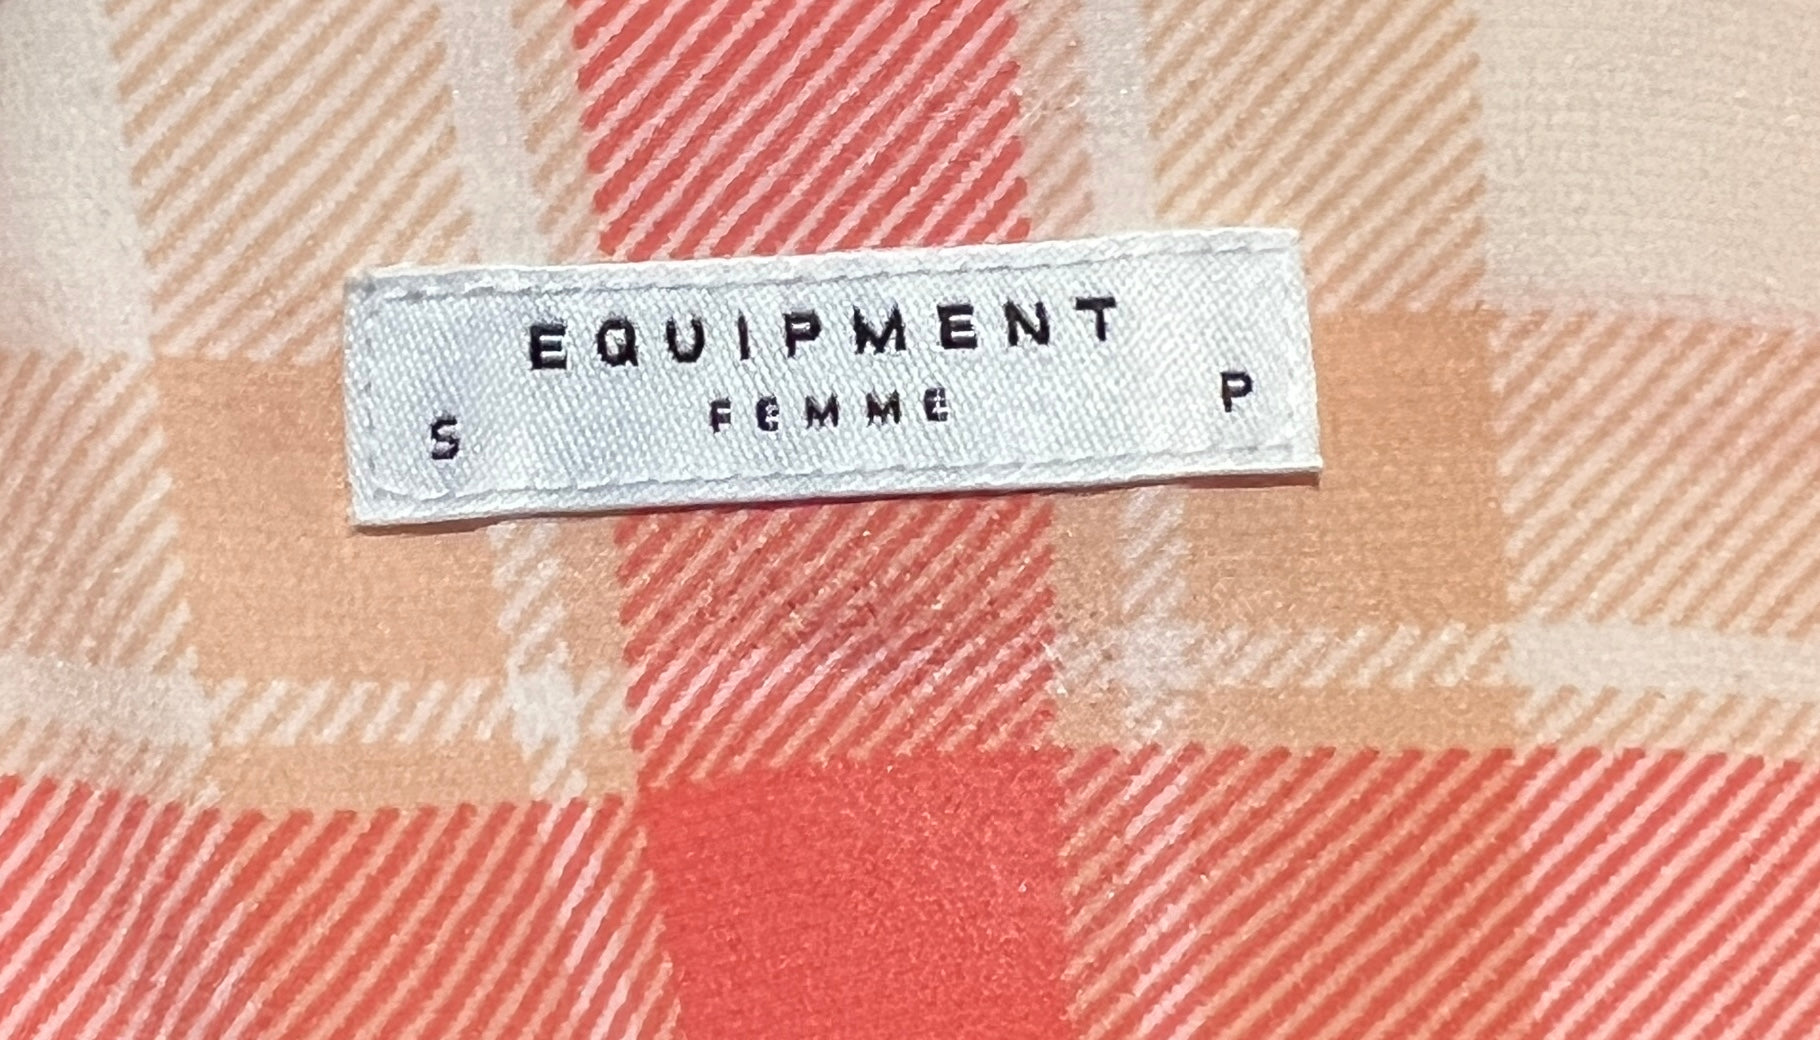 Equipment Orange Plaid Silk Pullover Shirt, XL